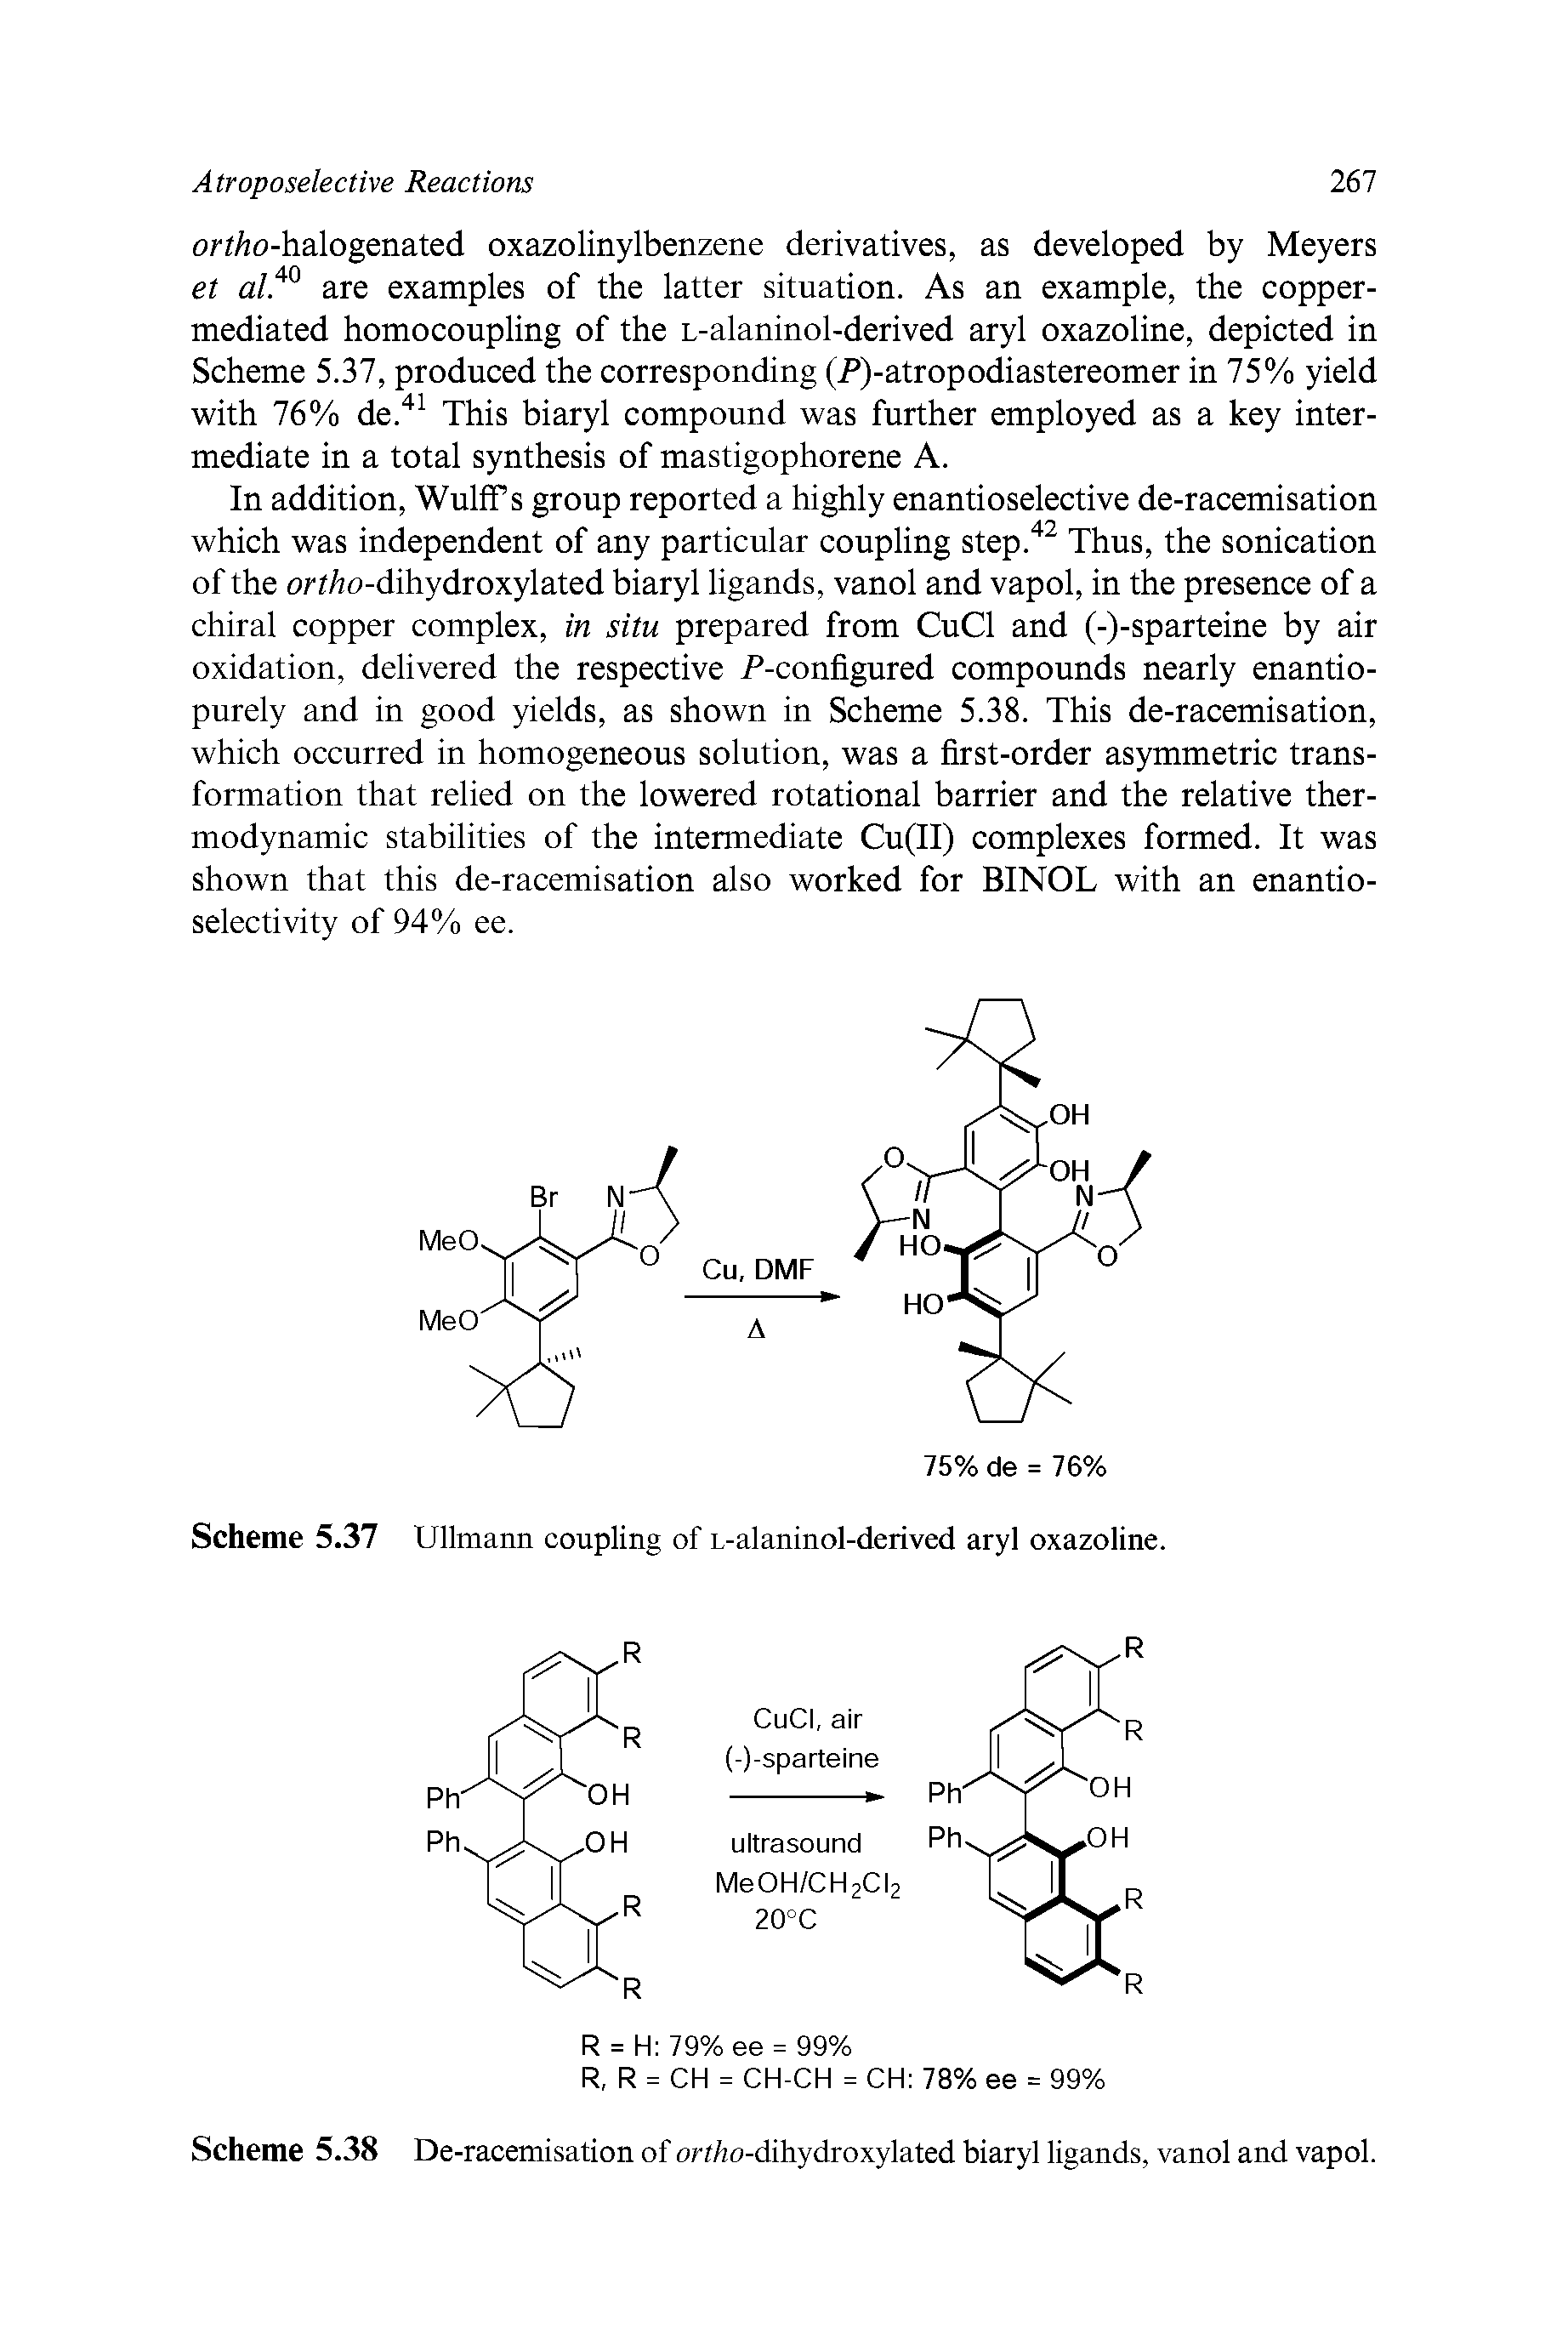 Scheme 5.37 Ullmann coupling of L-alaninol-derived aryl oxazoline.